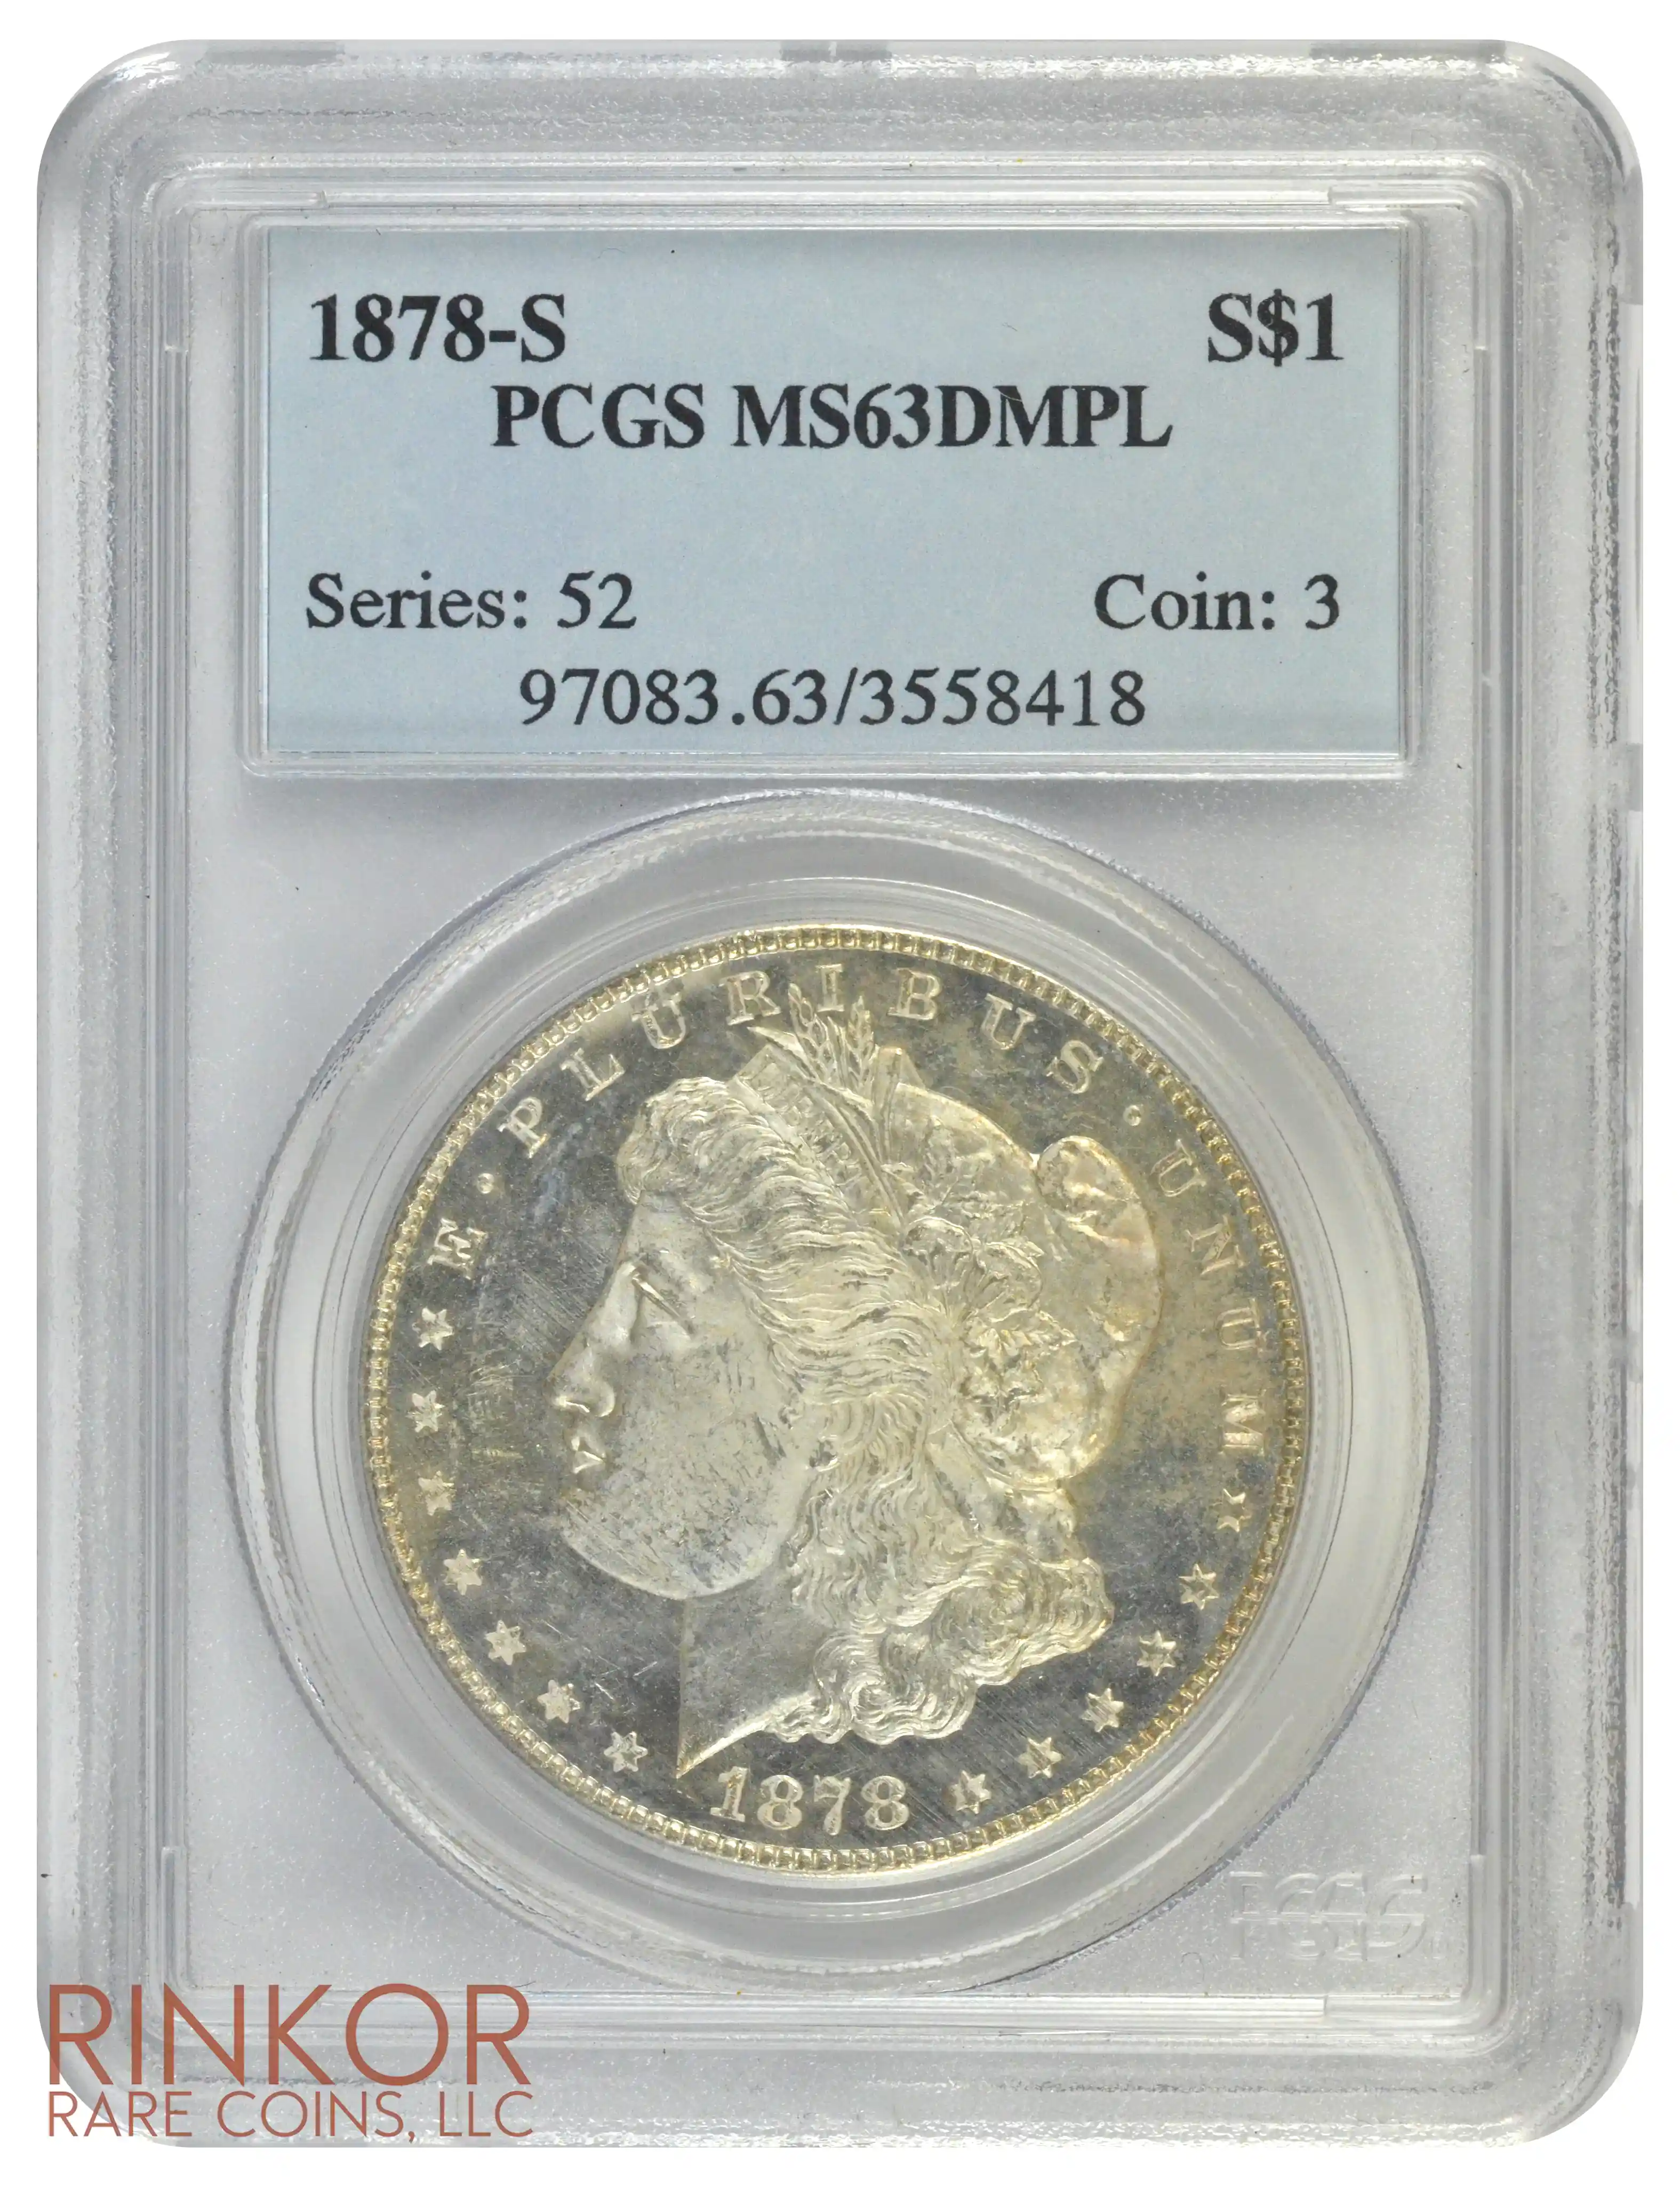 1878-S $1 PCGS MS 63 DMPL